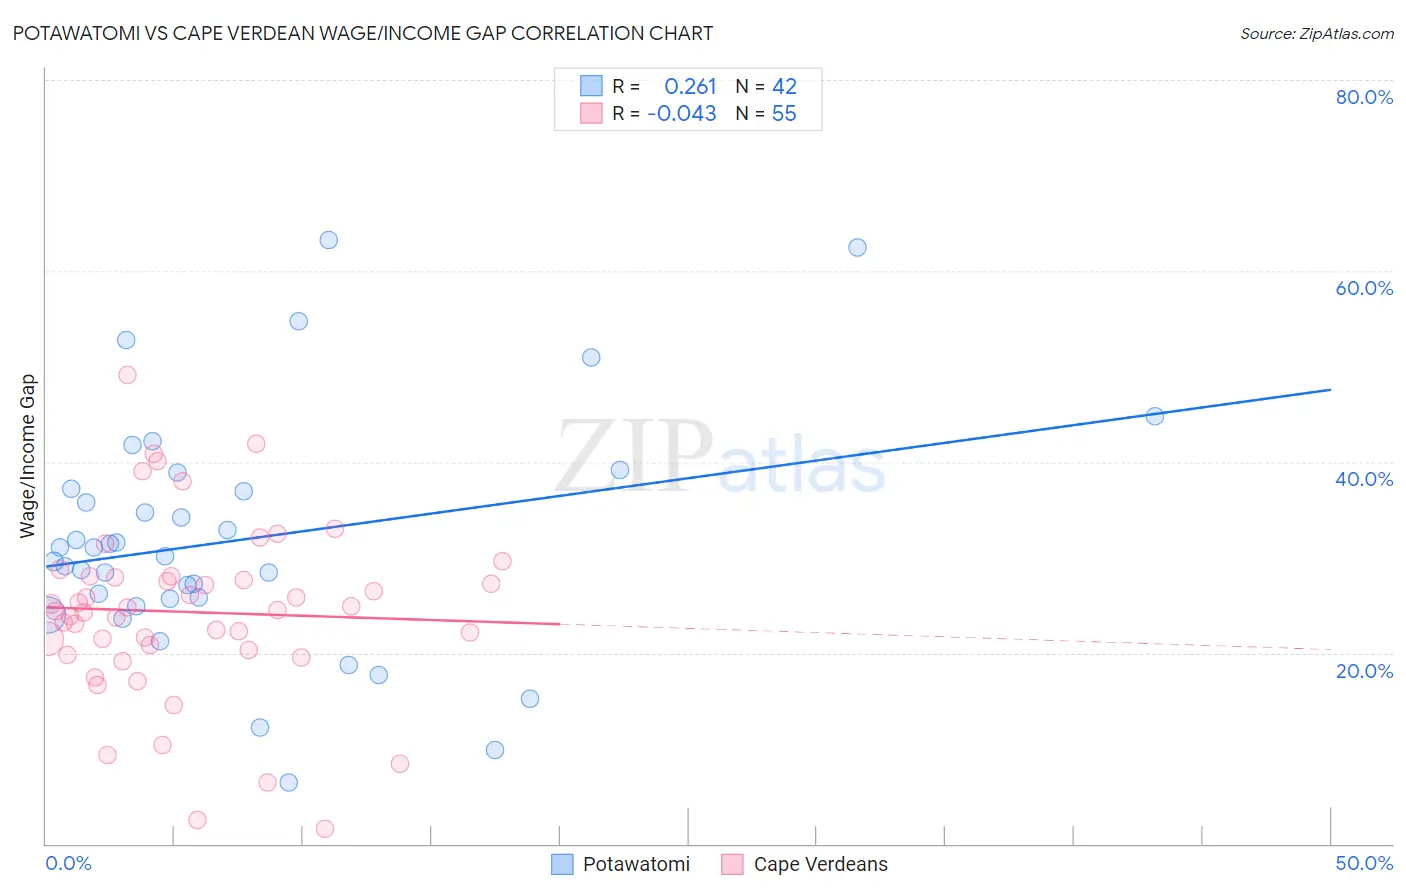 Potawatomi vs Cape Verdean Wage/Income Gap